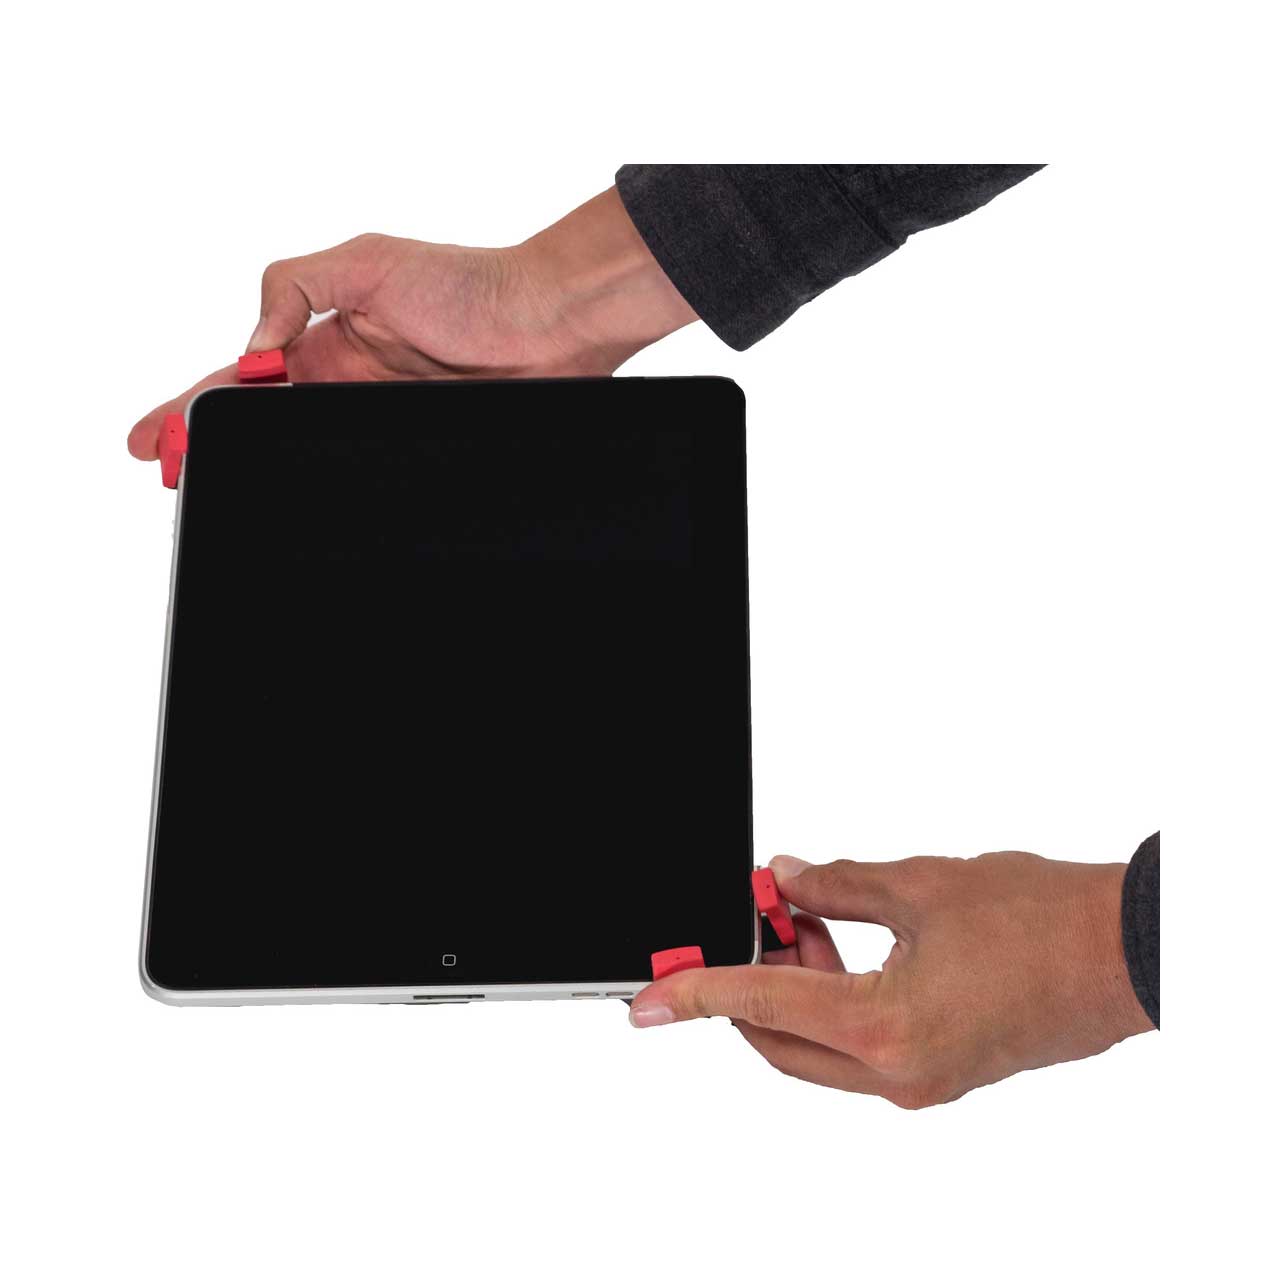 Prompter People UL-IPADBRPRO iPad PRO Surface Pro Tablet Tabgrabber  Uiniversal Cradle For Legacy ProLine/Flex/Ultraflex